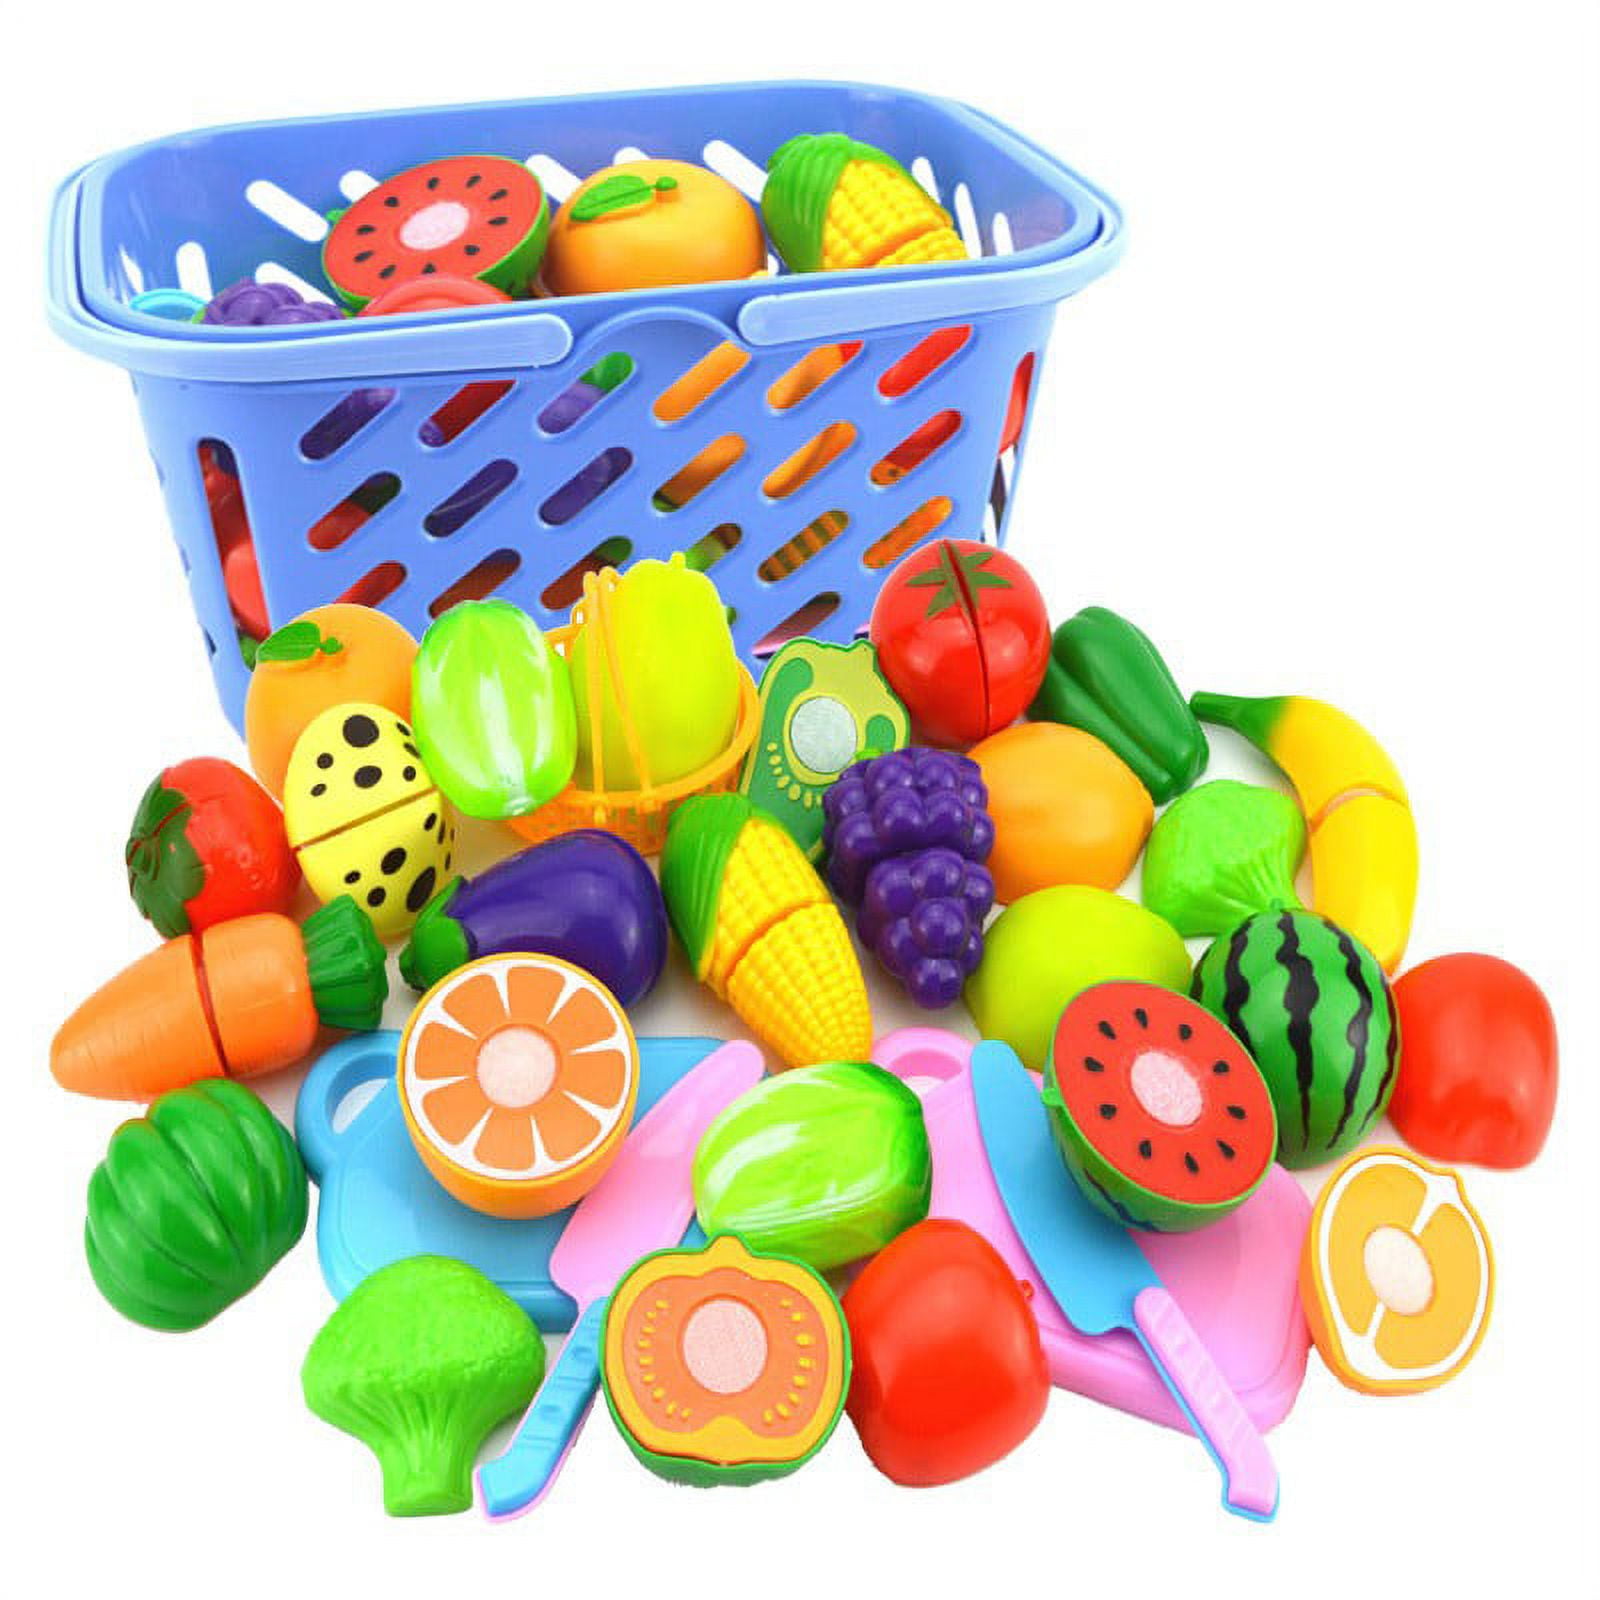 Fun Preschool Children Plastic Cutting Vegetables Fruits Baby